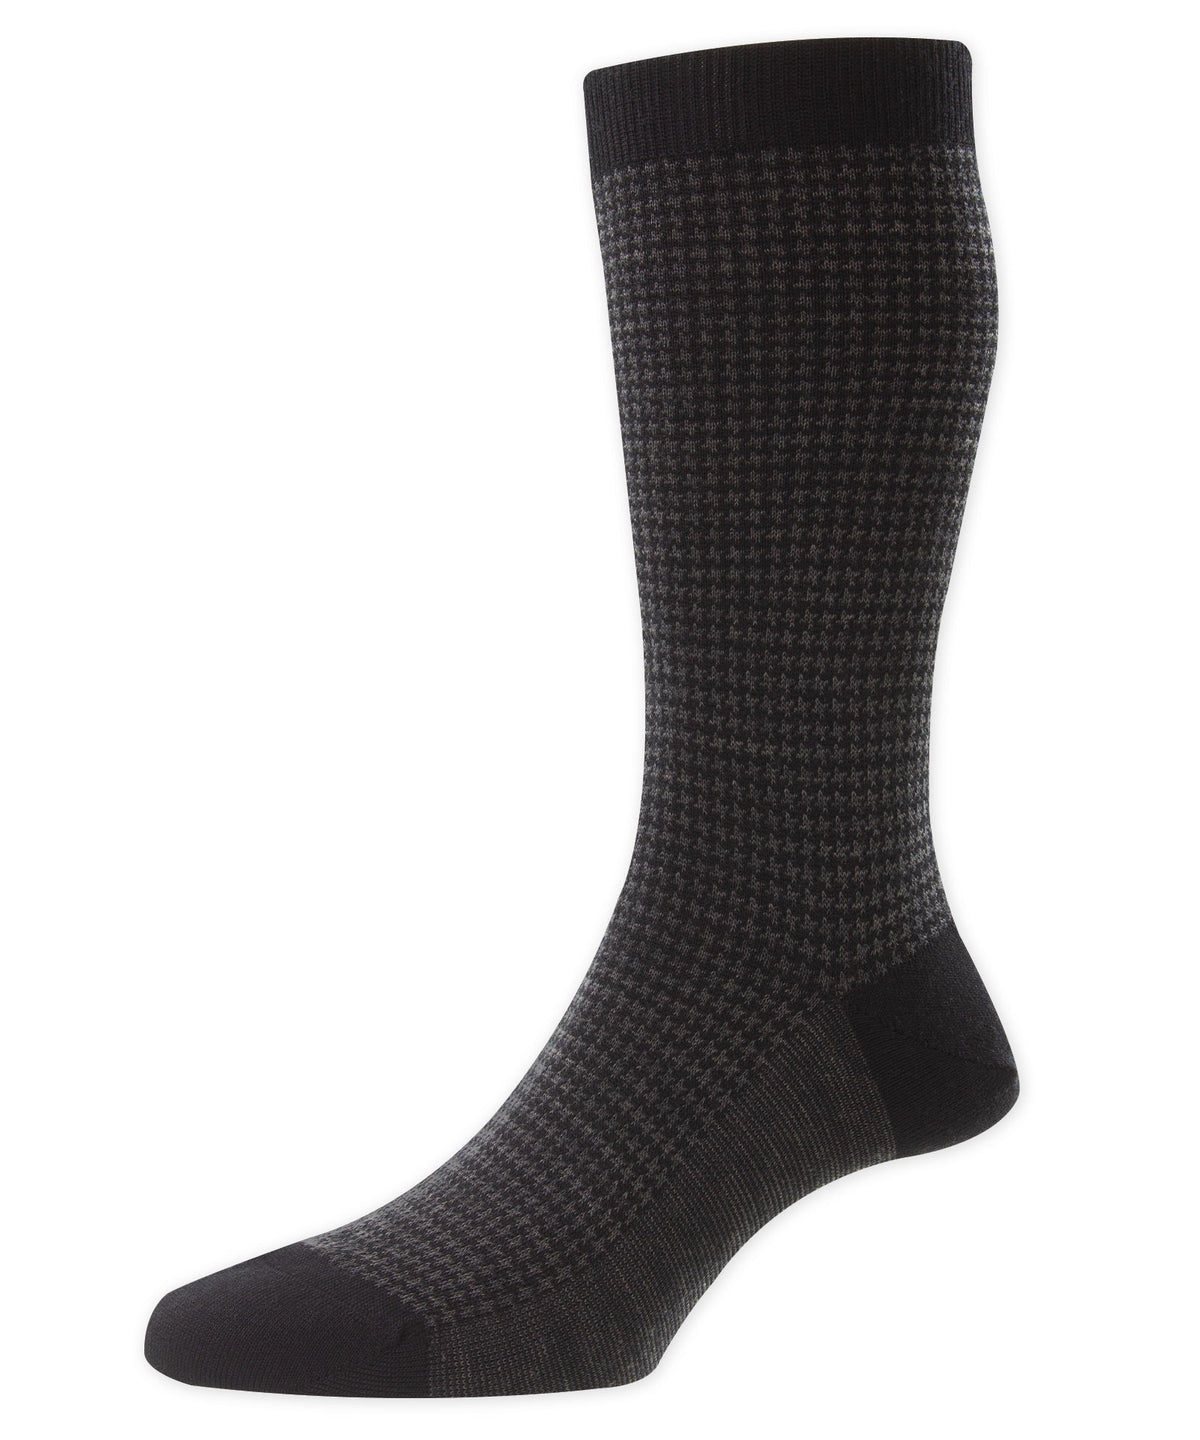 Pantherella Highbury Houndstooth Merino Wool Blend Socks